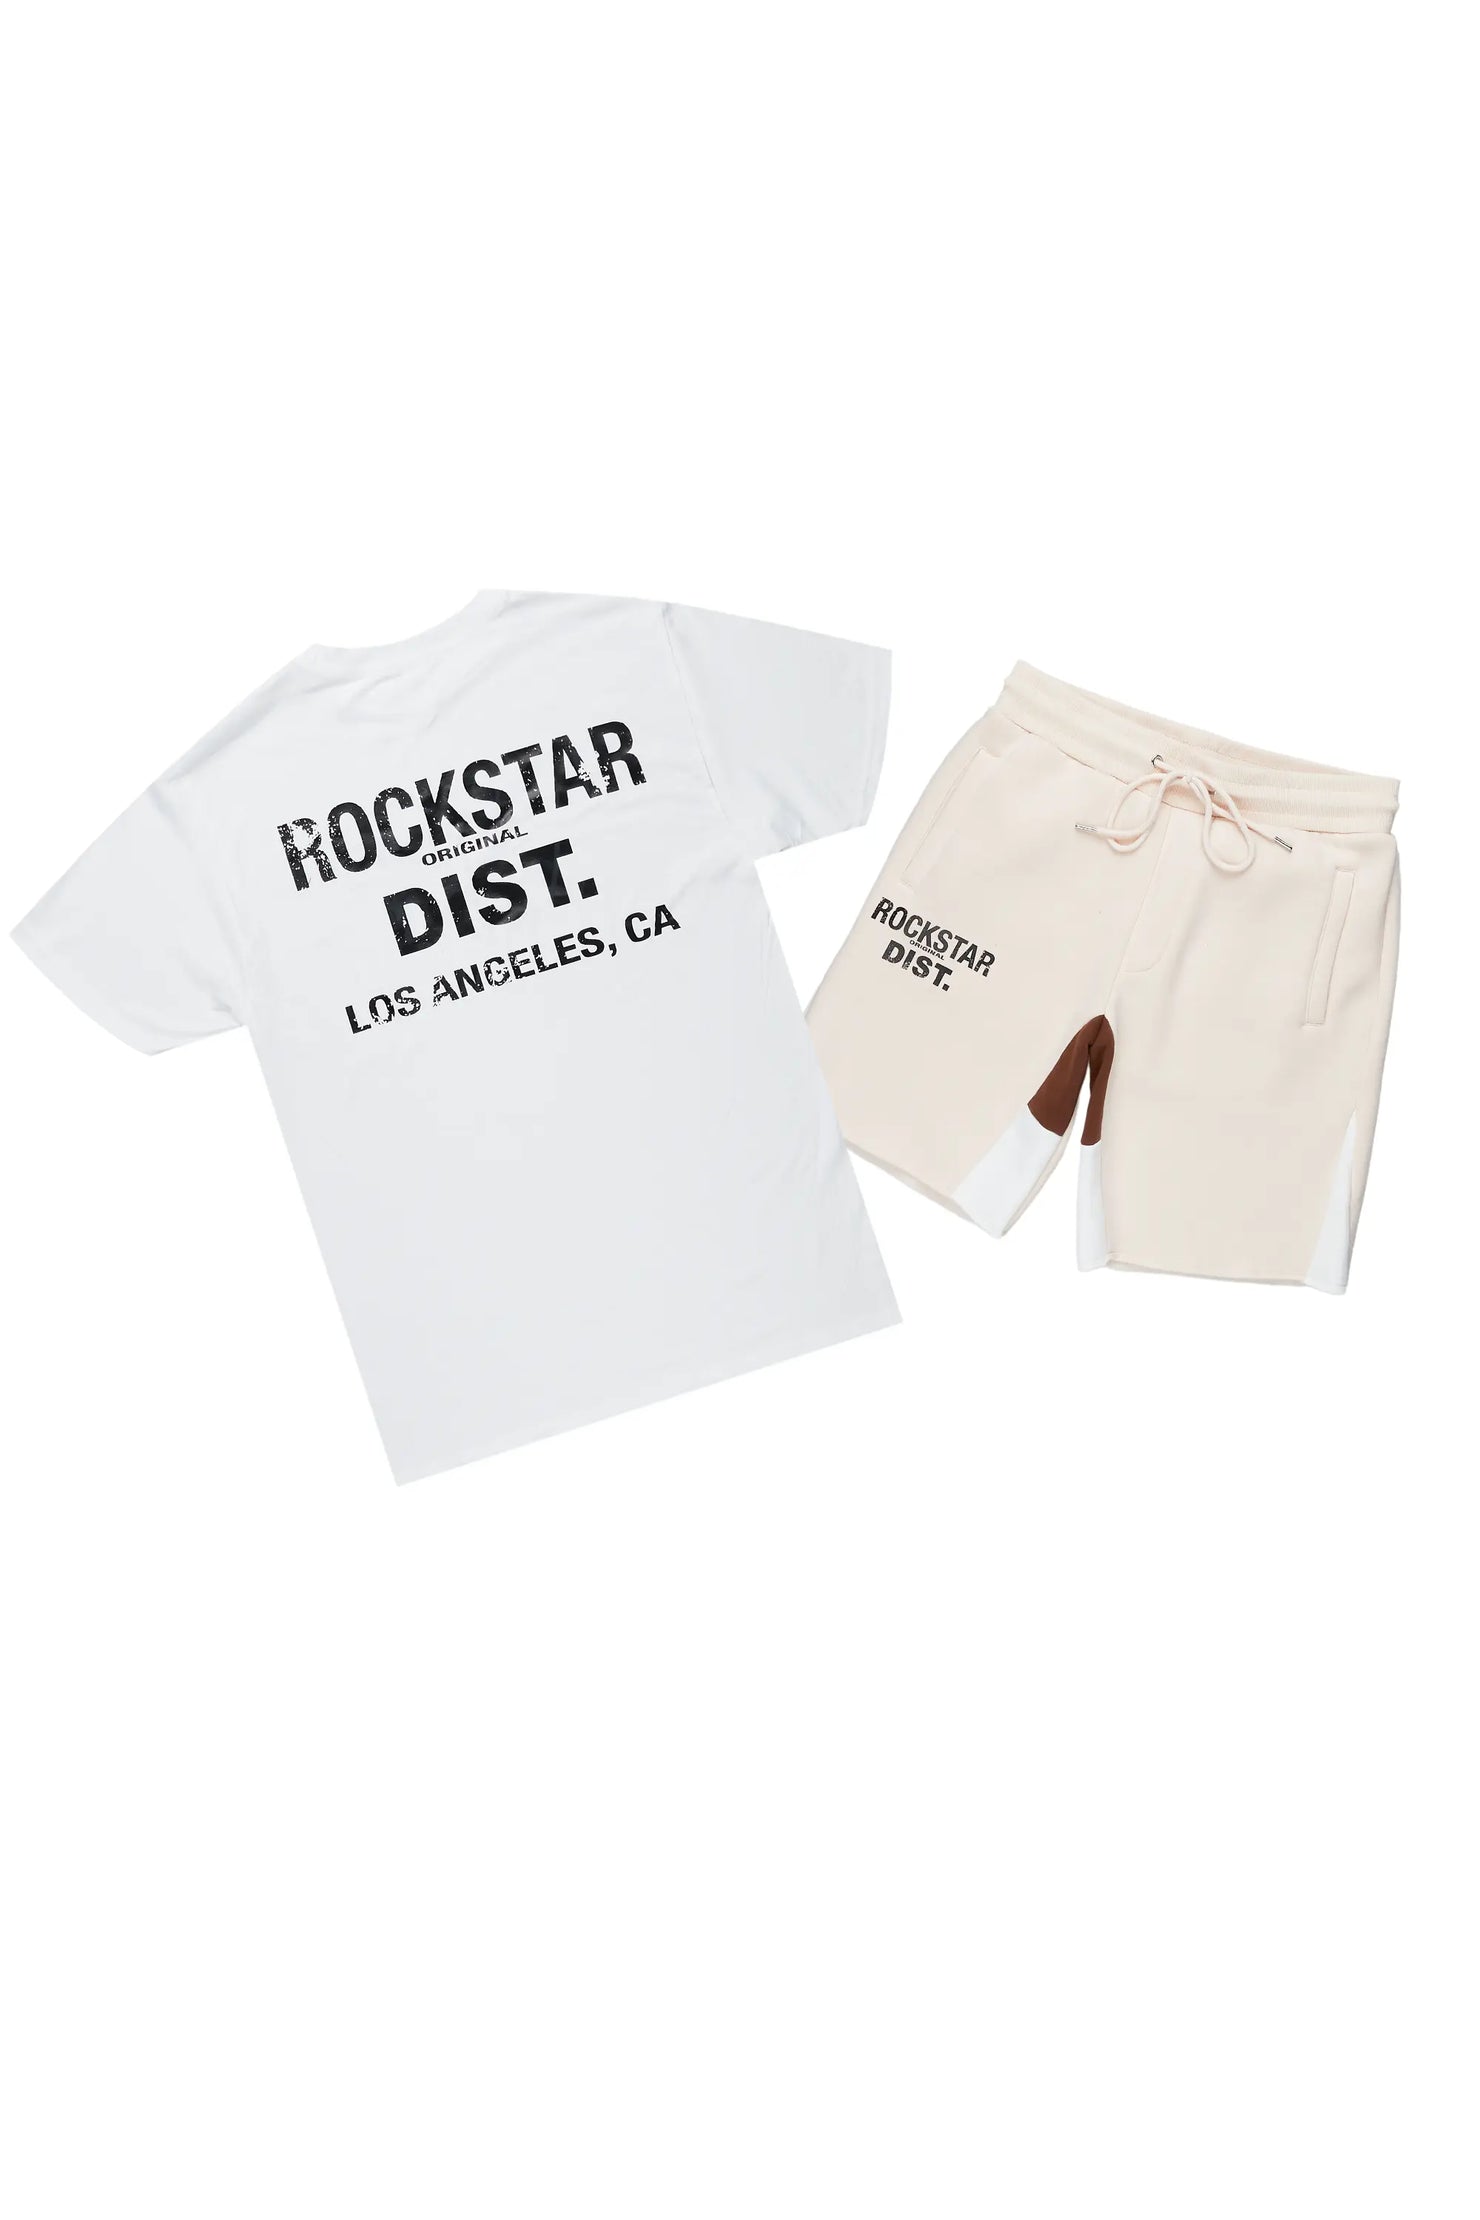 Buck 3.0 White/Beige T-Shirt Short Set